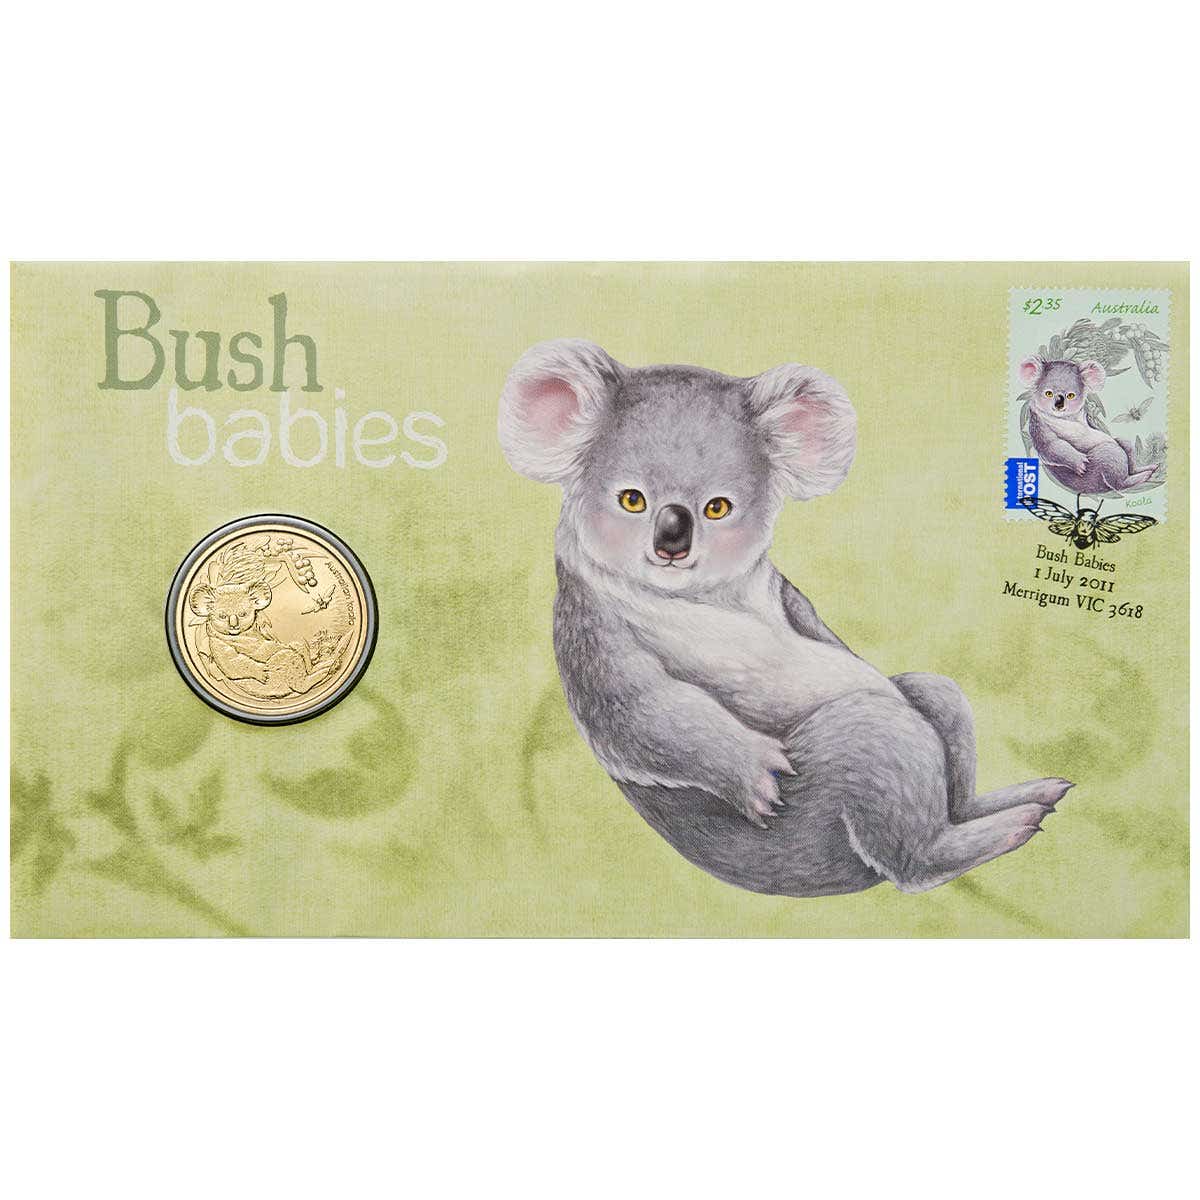 Bush Babies Koala 2011 $1 Stamp & Coin Cover